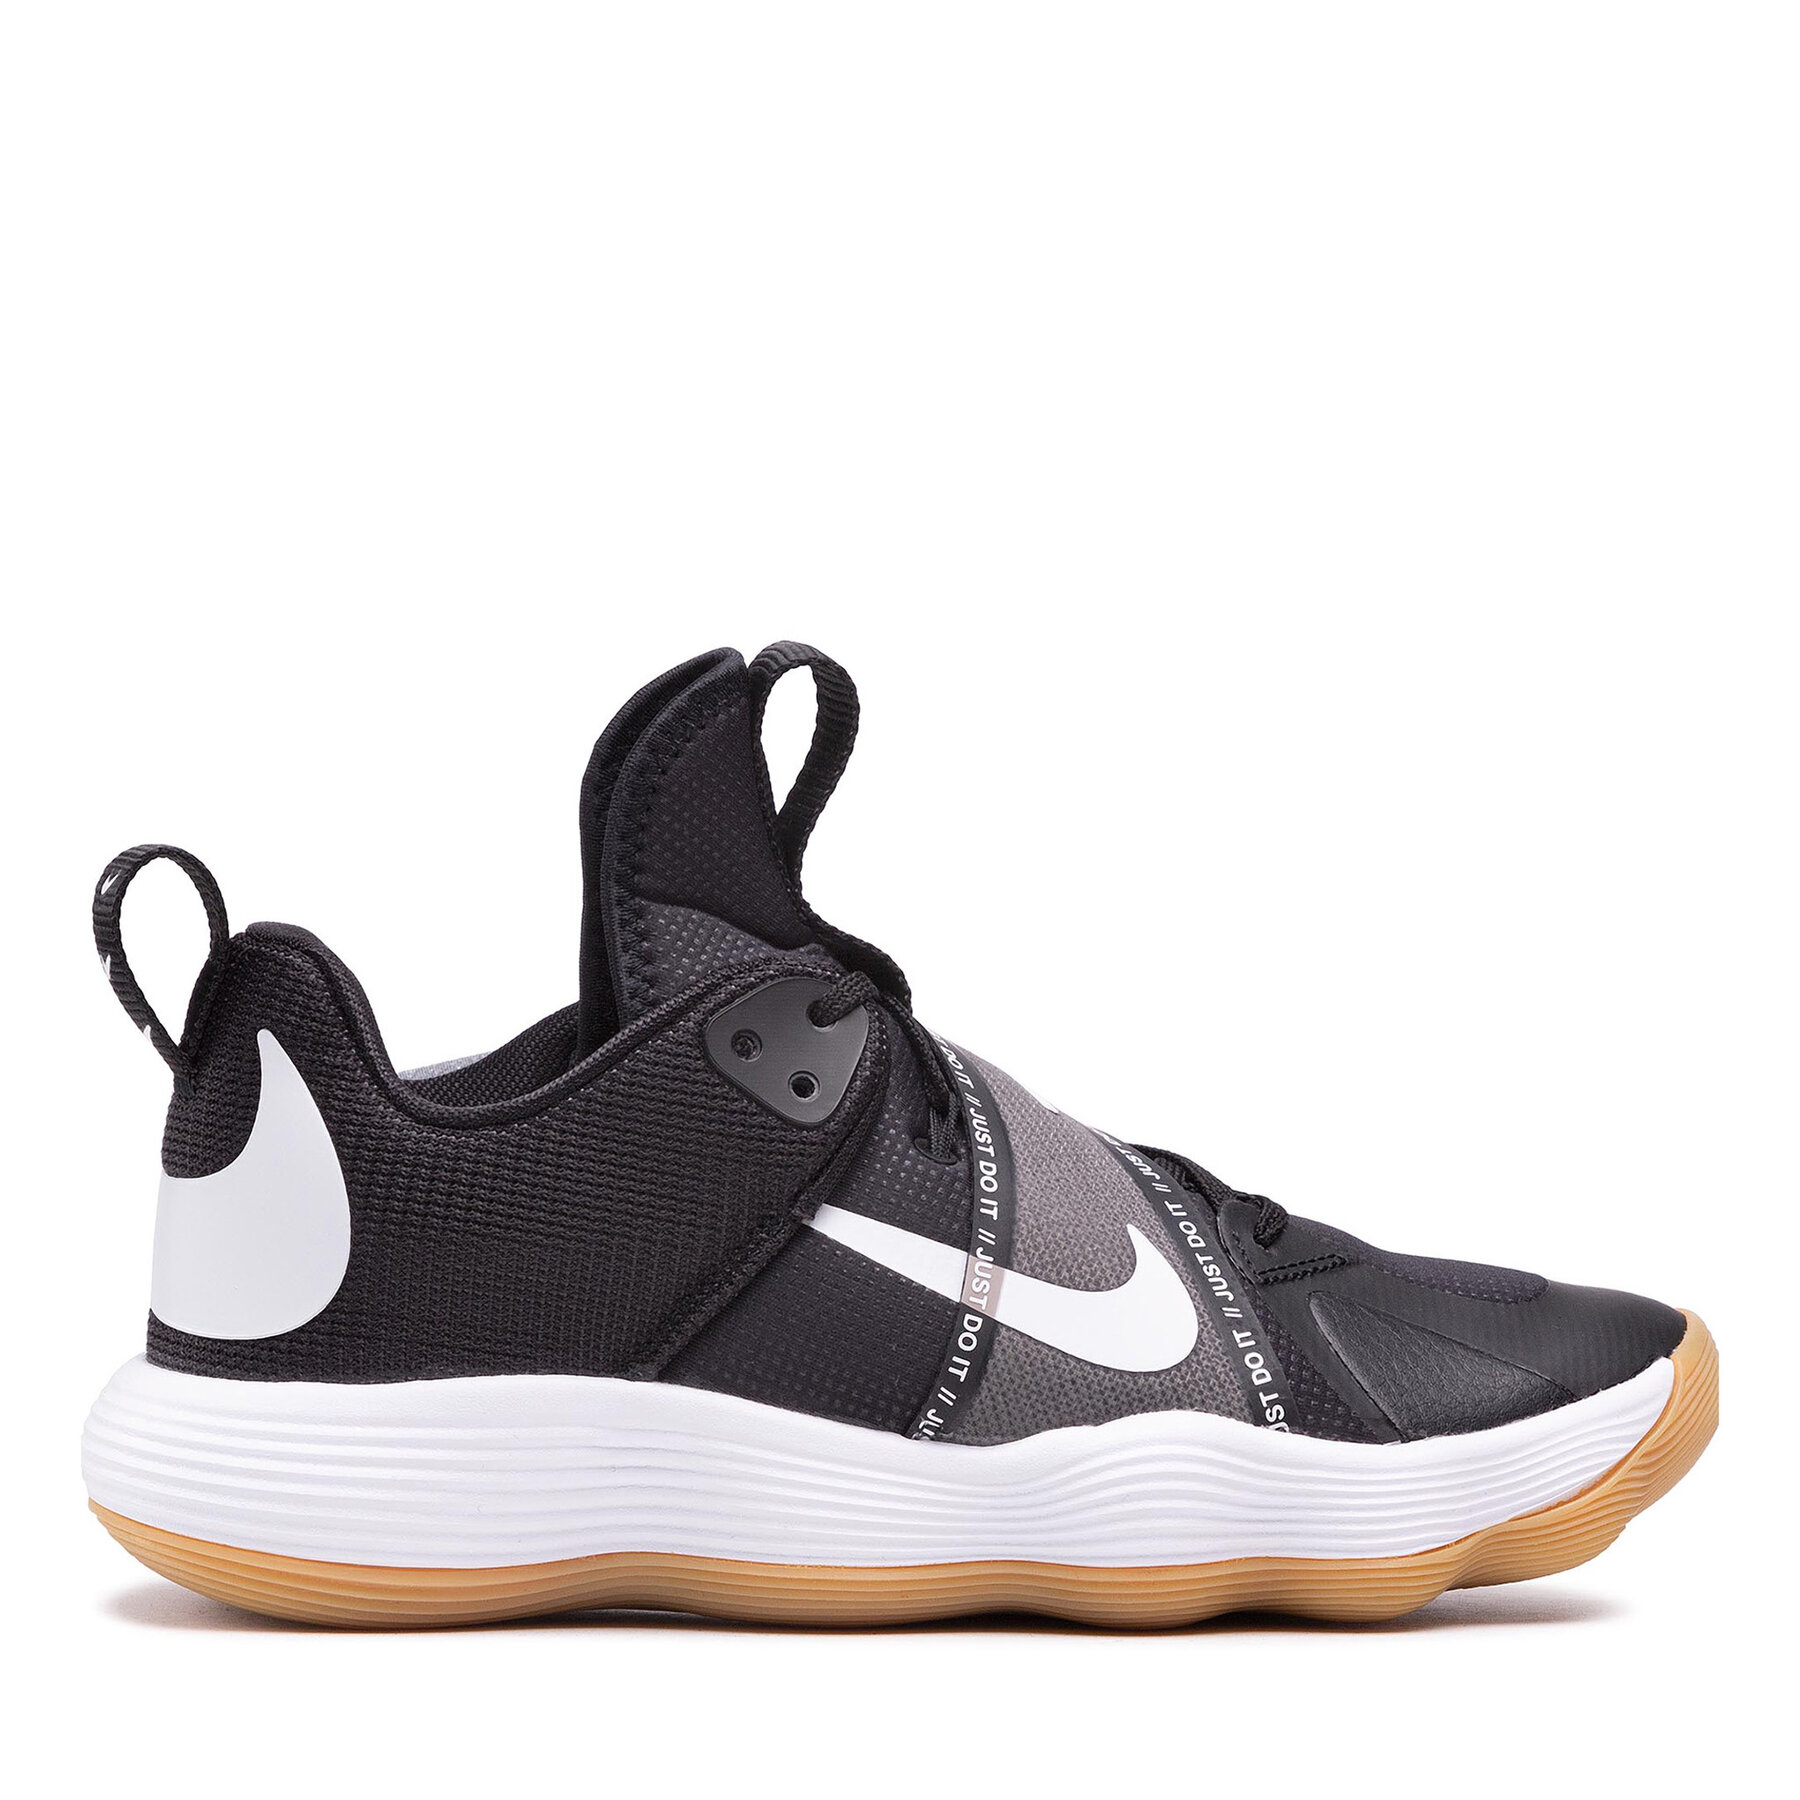 Nike React HyperSet (CI2955) black/gum light brown/white